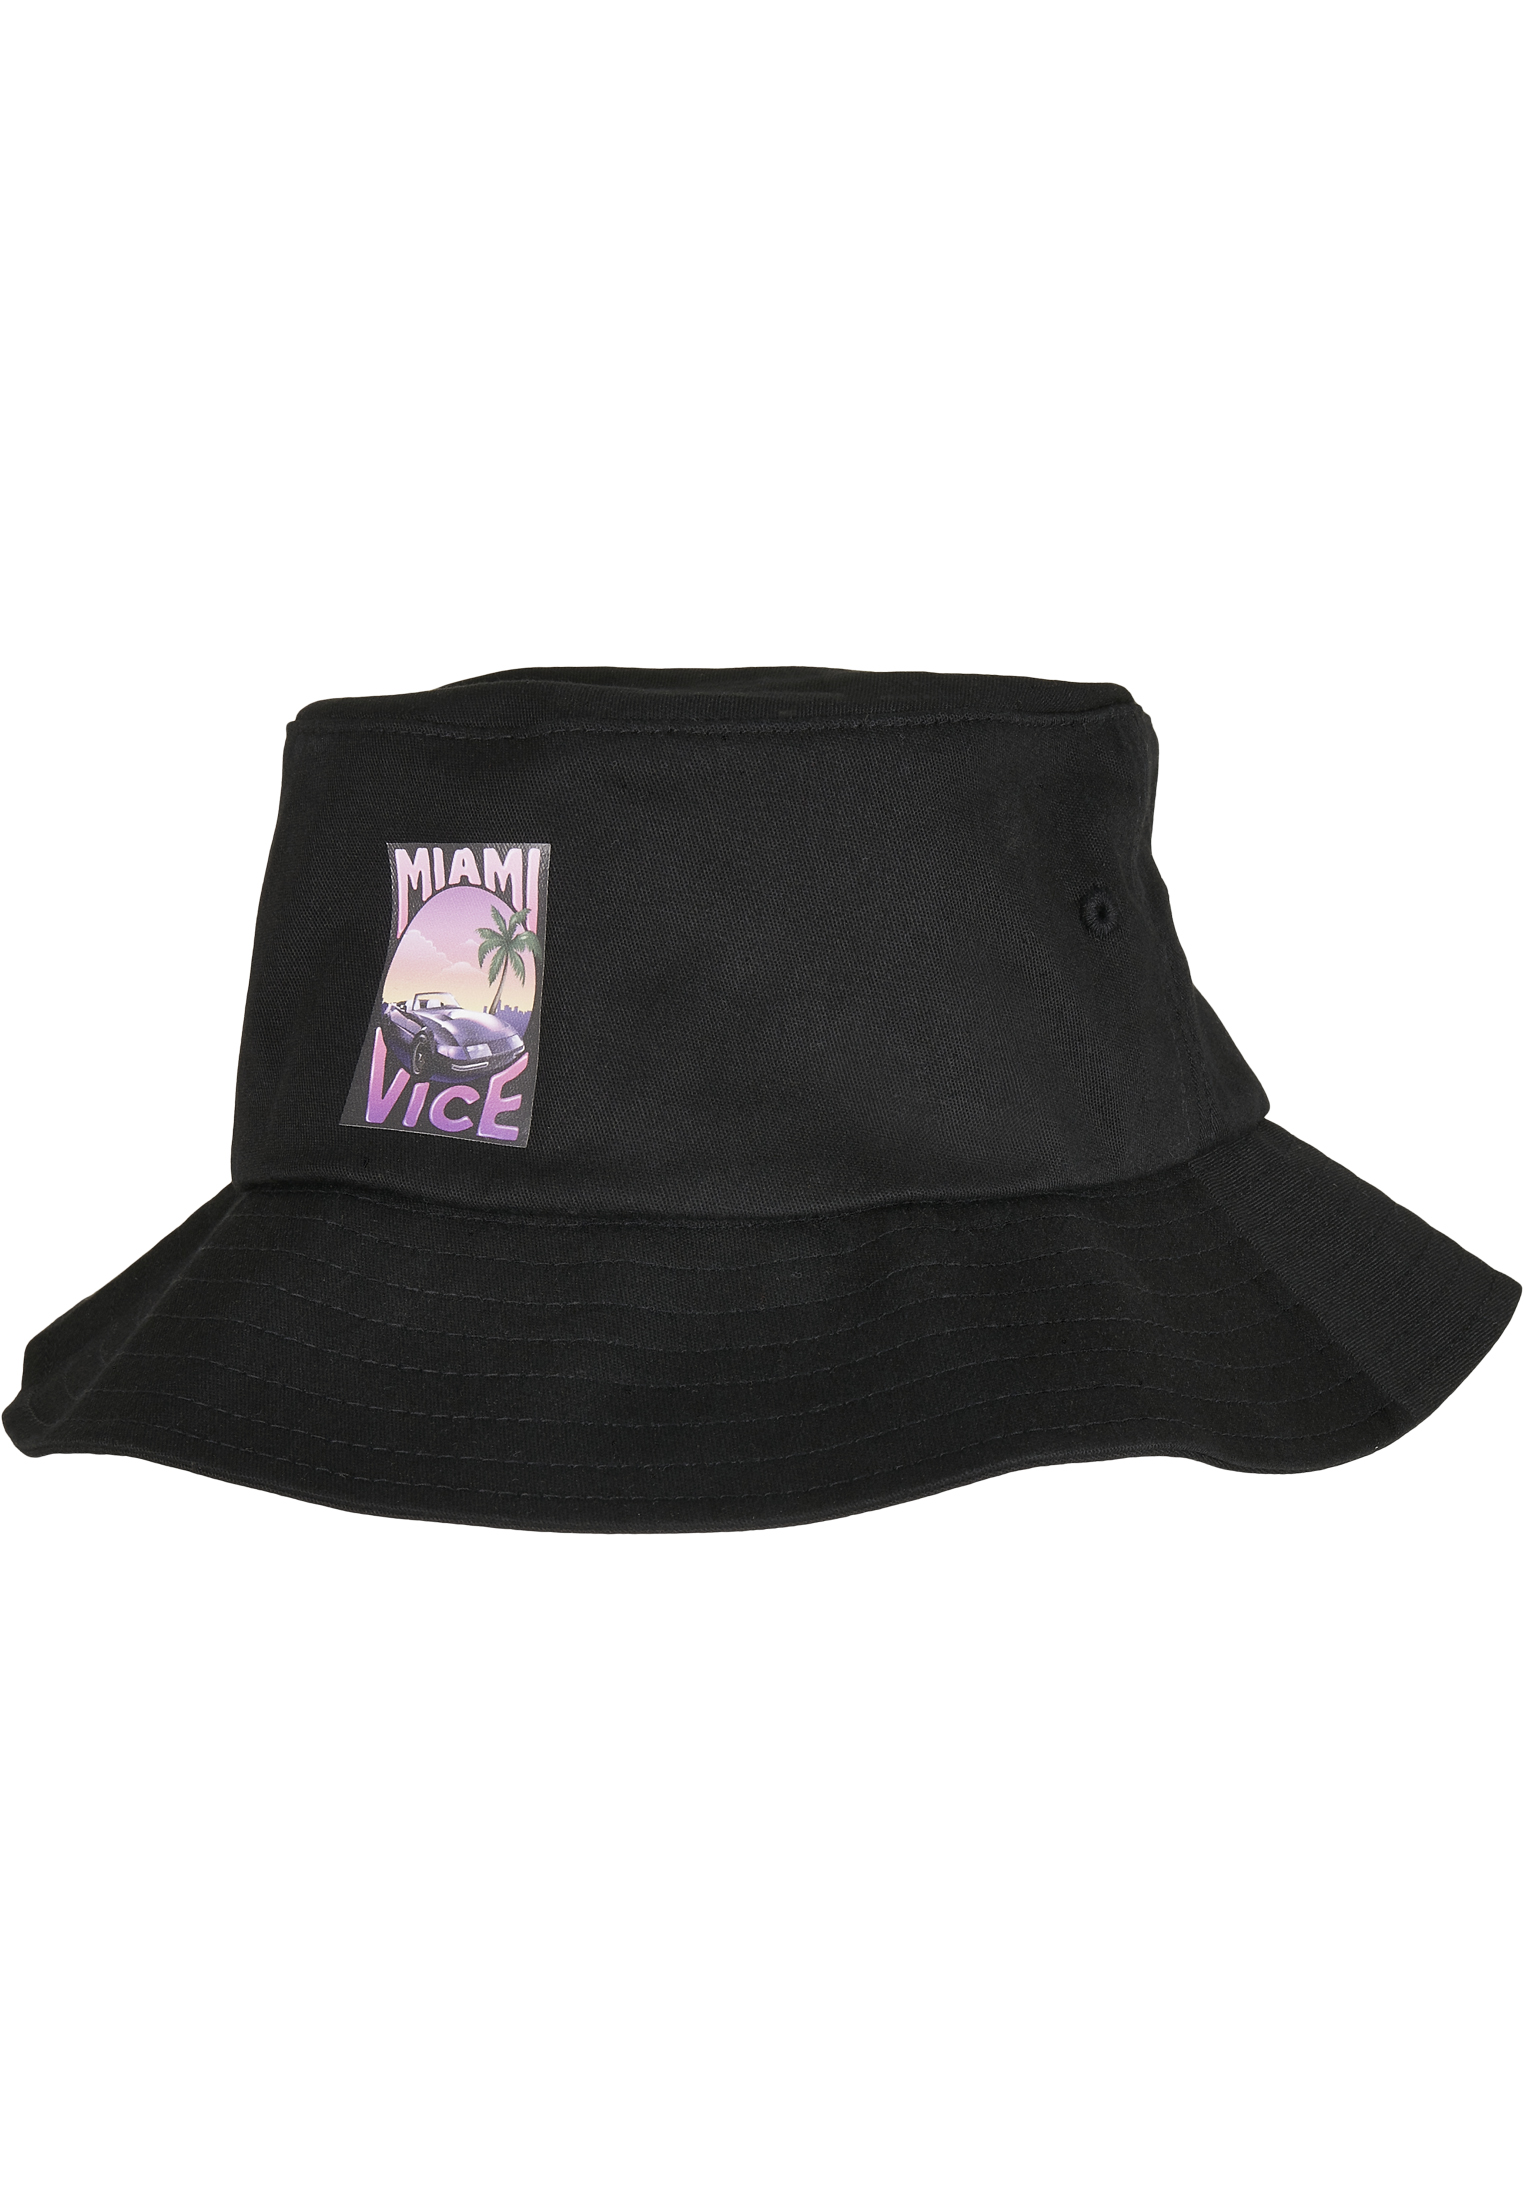 Miami Vice Print Bucket Hat-MC756